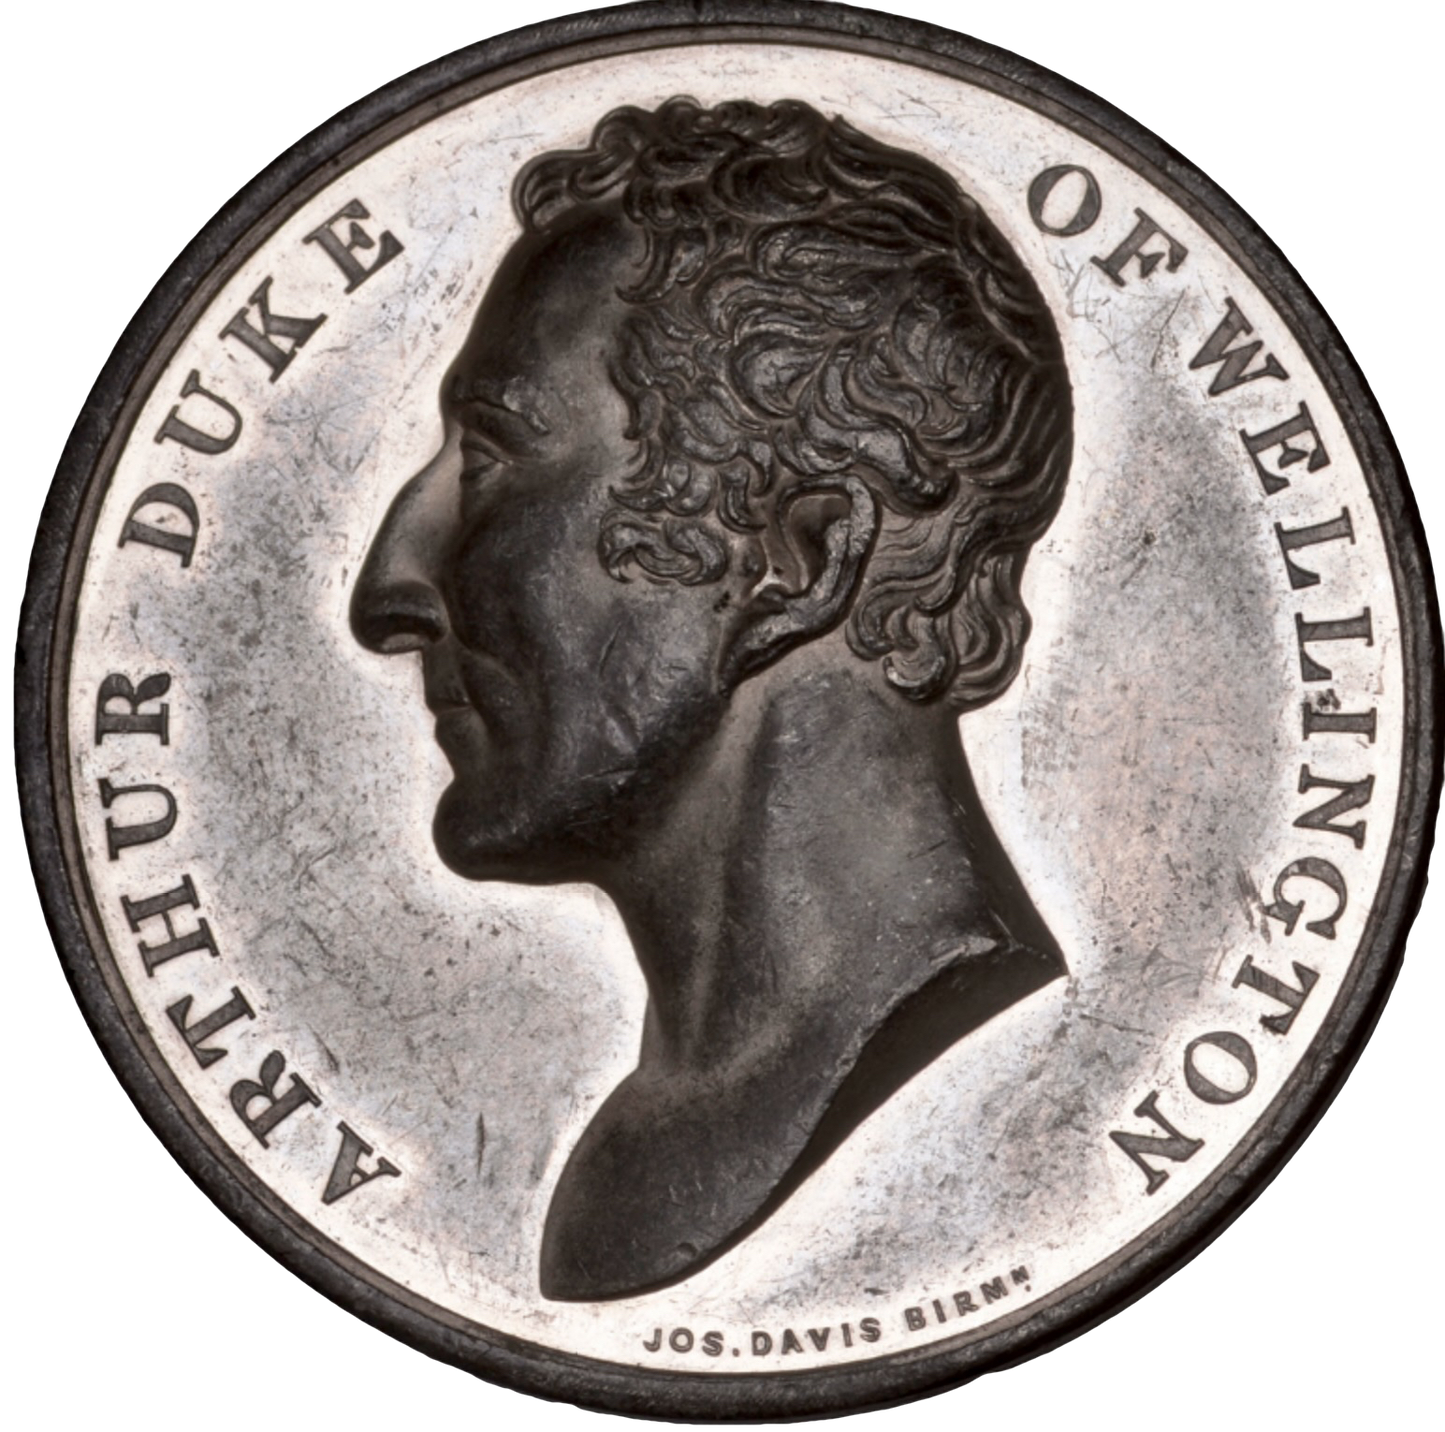 1844 Duke of Wellington, Equestrian statue 51mm white metal medal BHM 2195